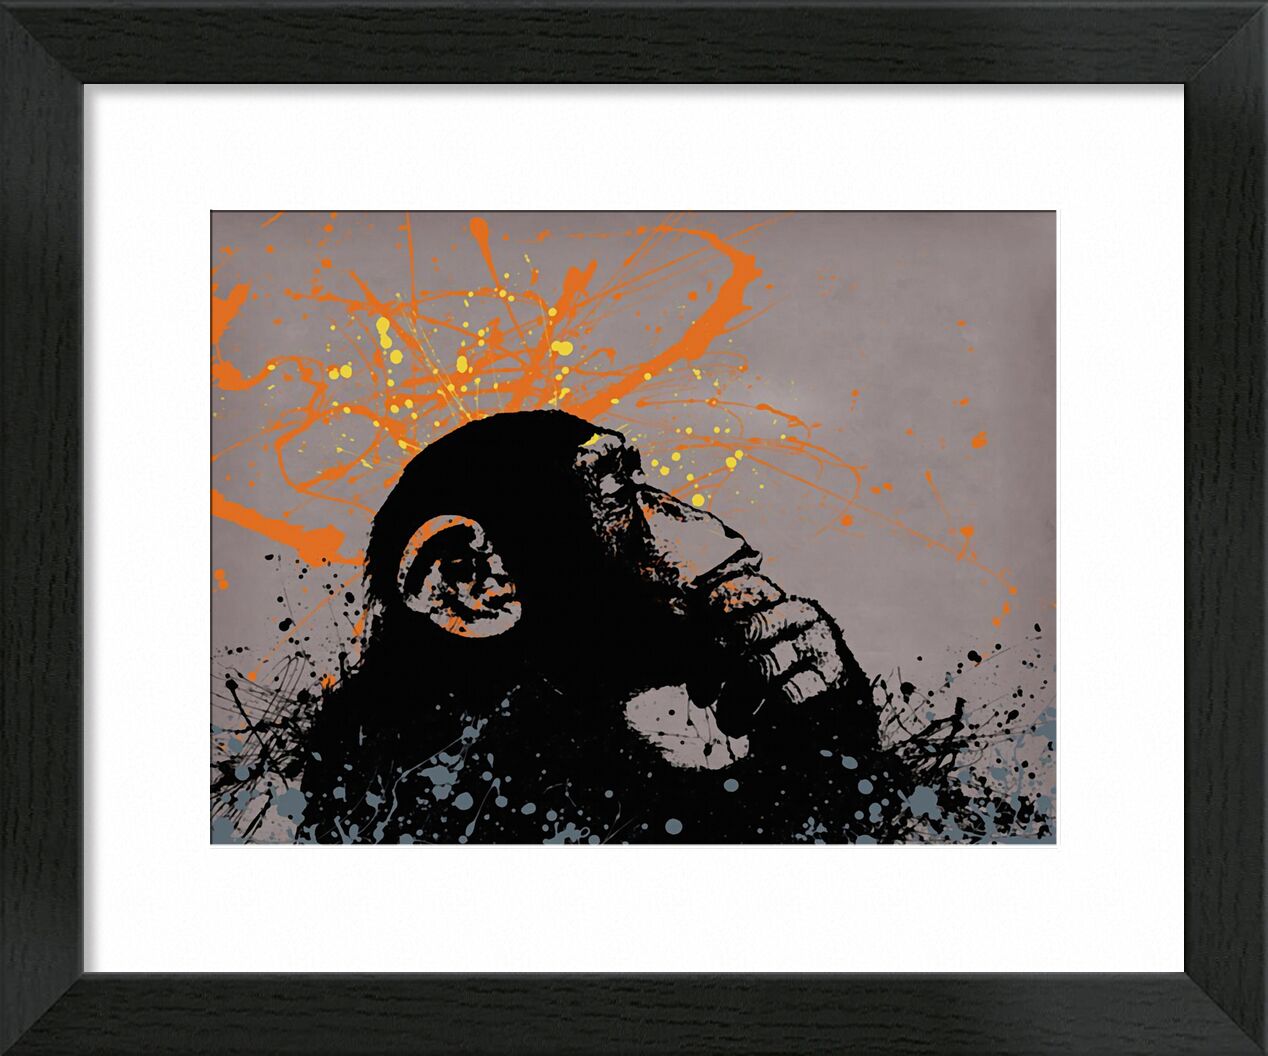 Thinker monkey - BANKSY desde Bellas artes, Prodi Art, arte callejero, pintada, Banksy, mono, gráfico